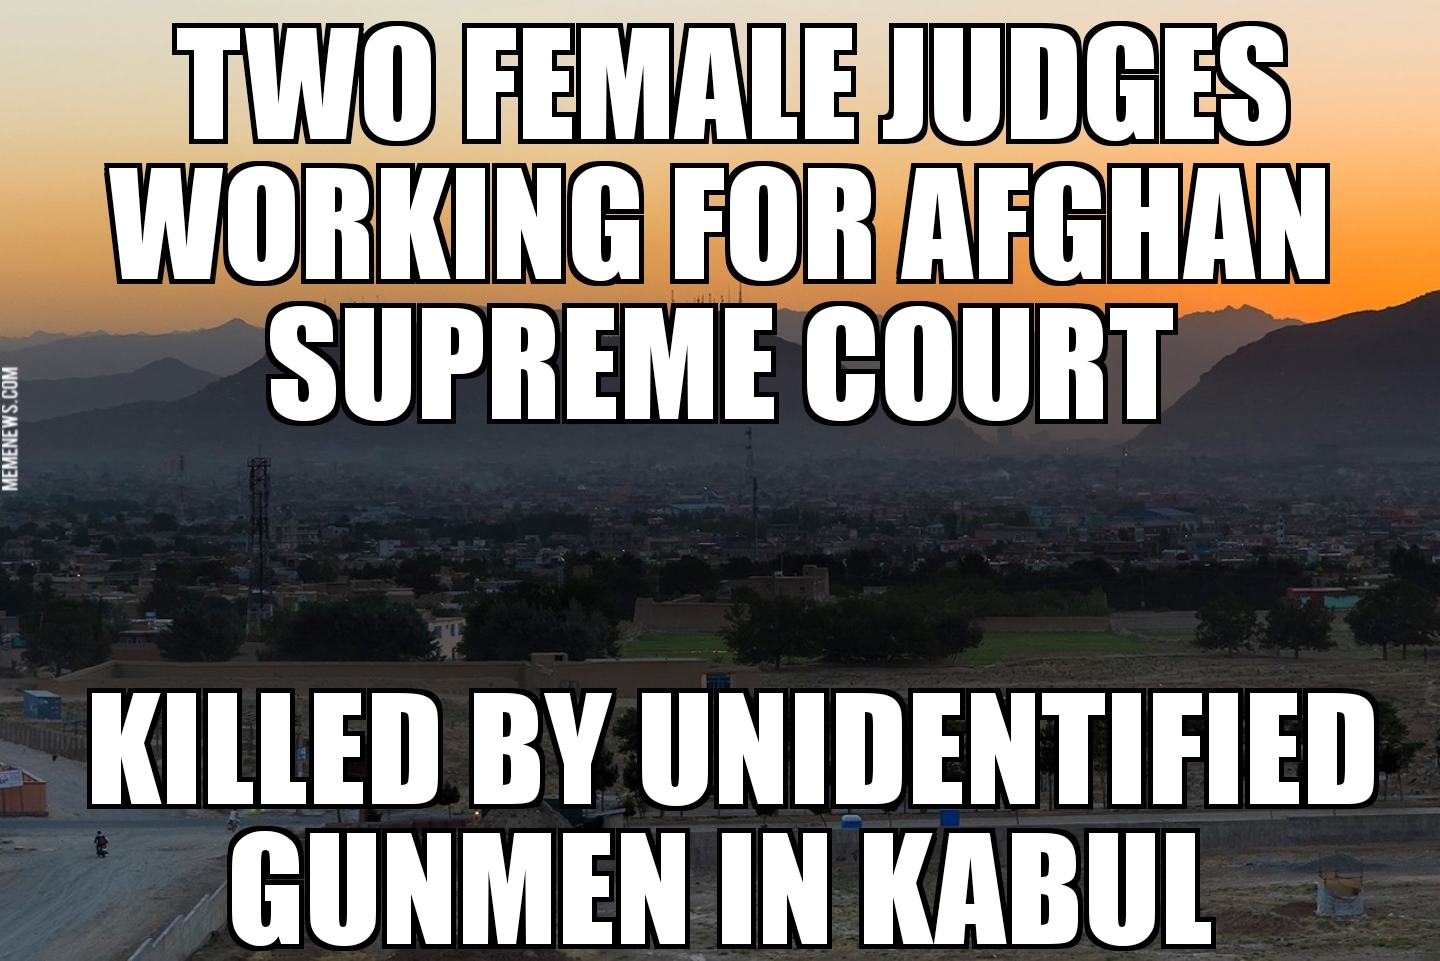 Female judges killed in Kabul